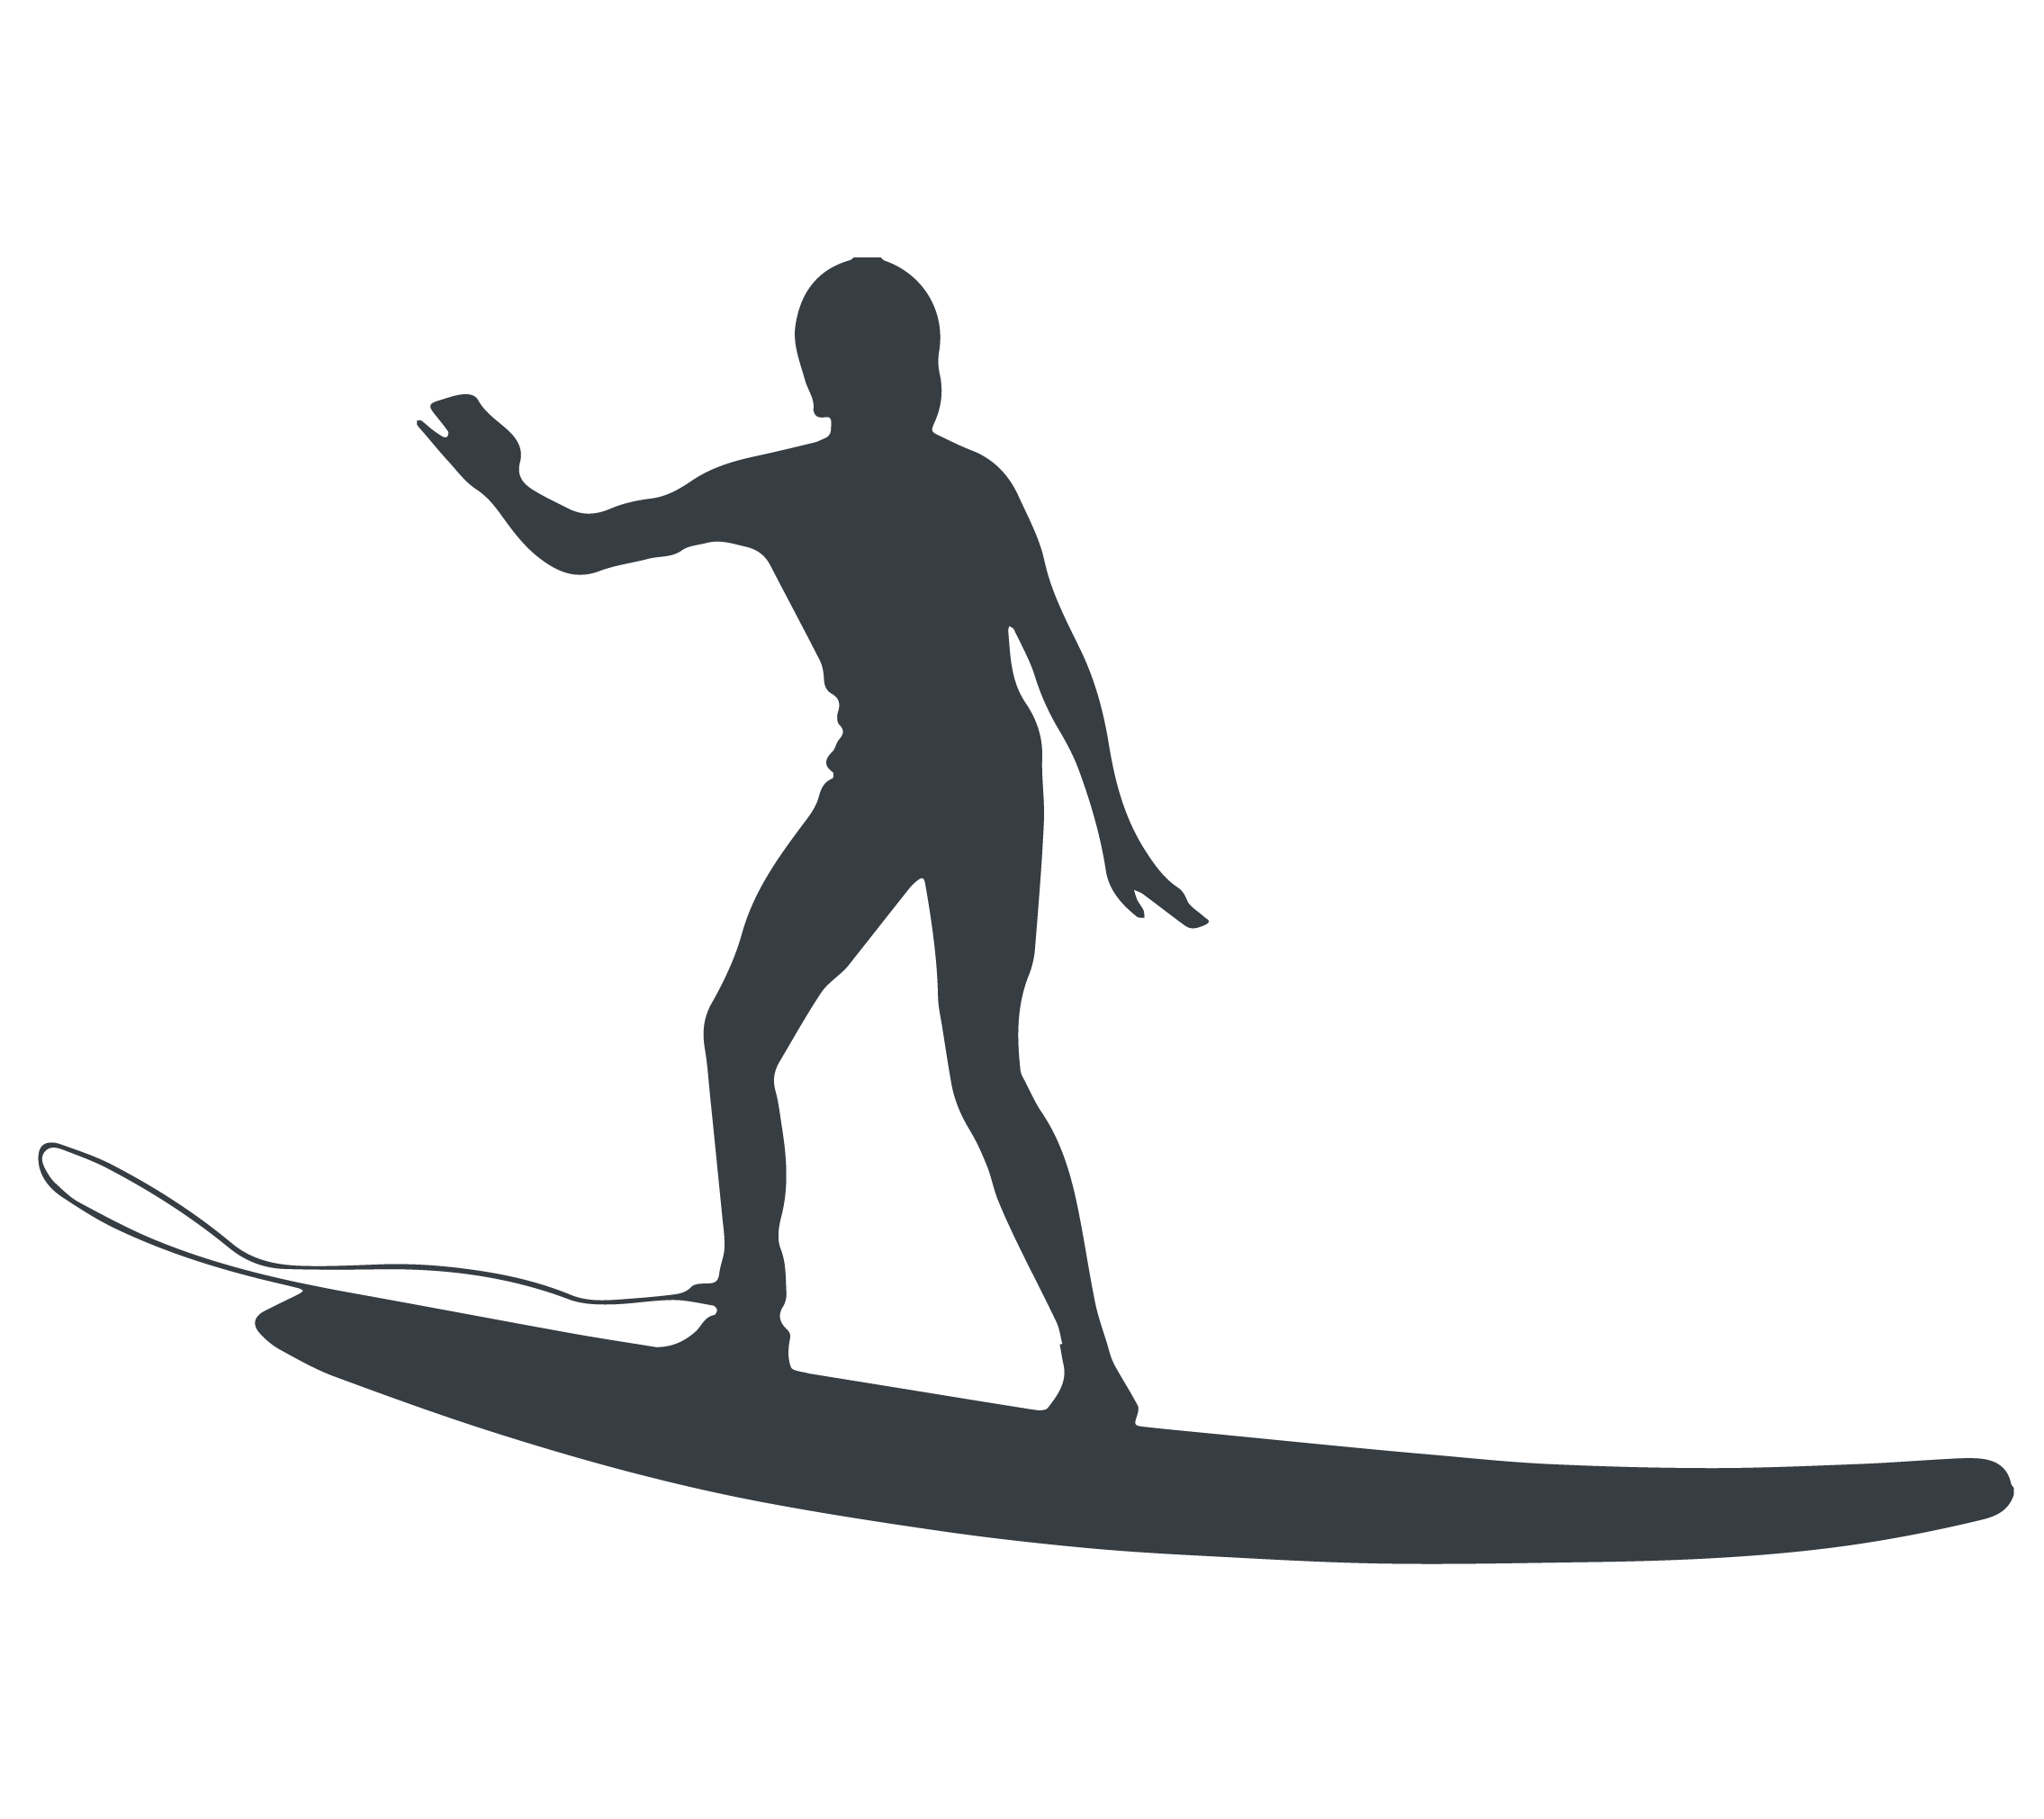 Surfing - Active & Safe